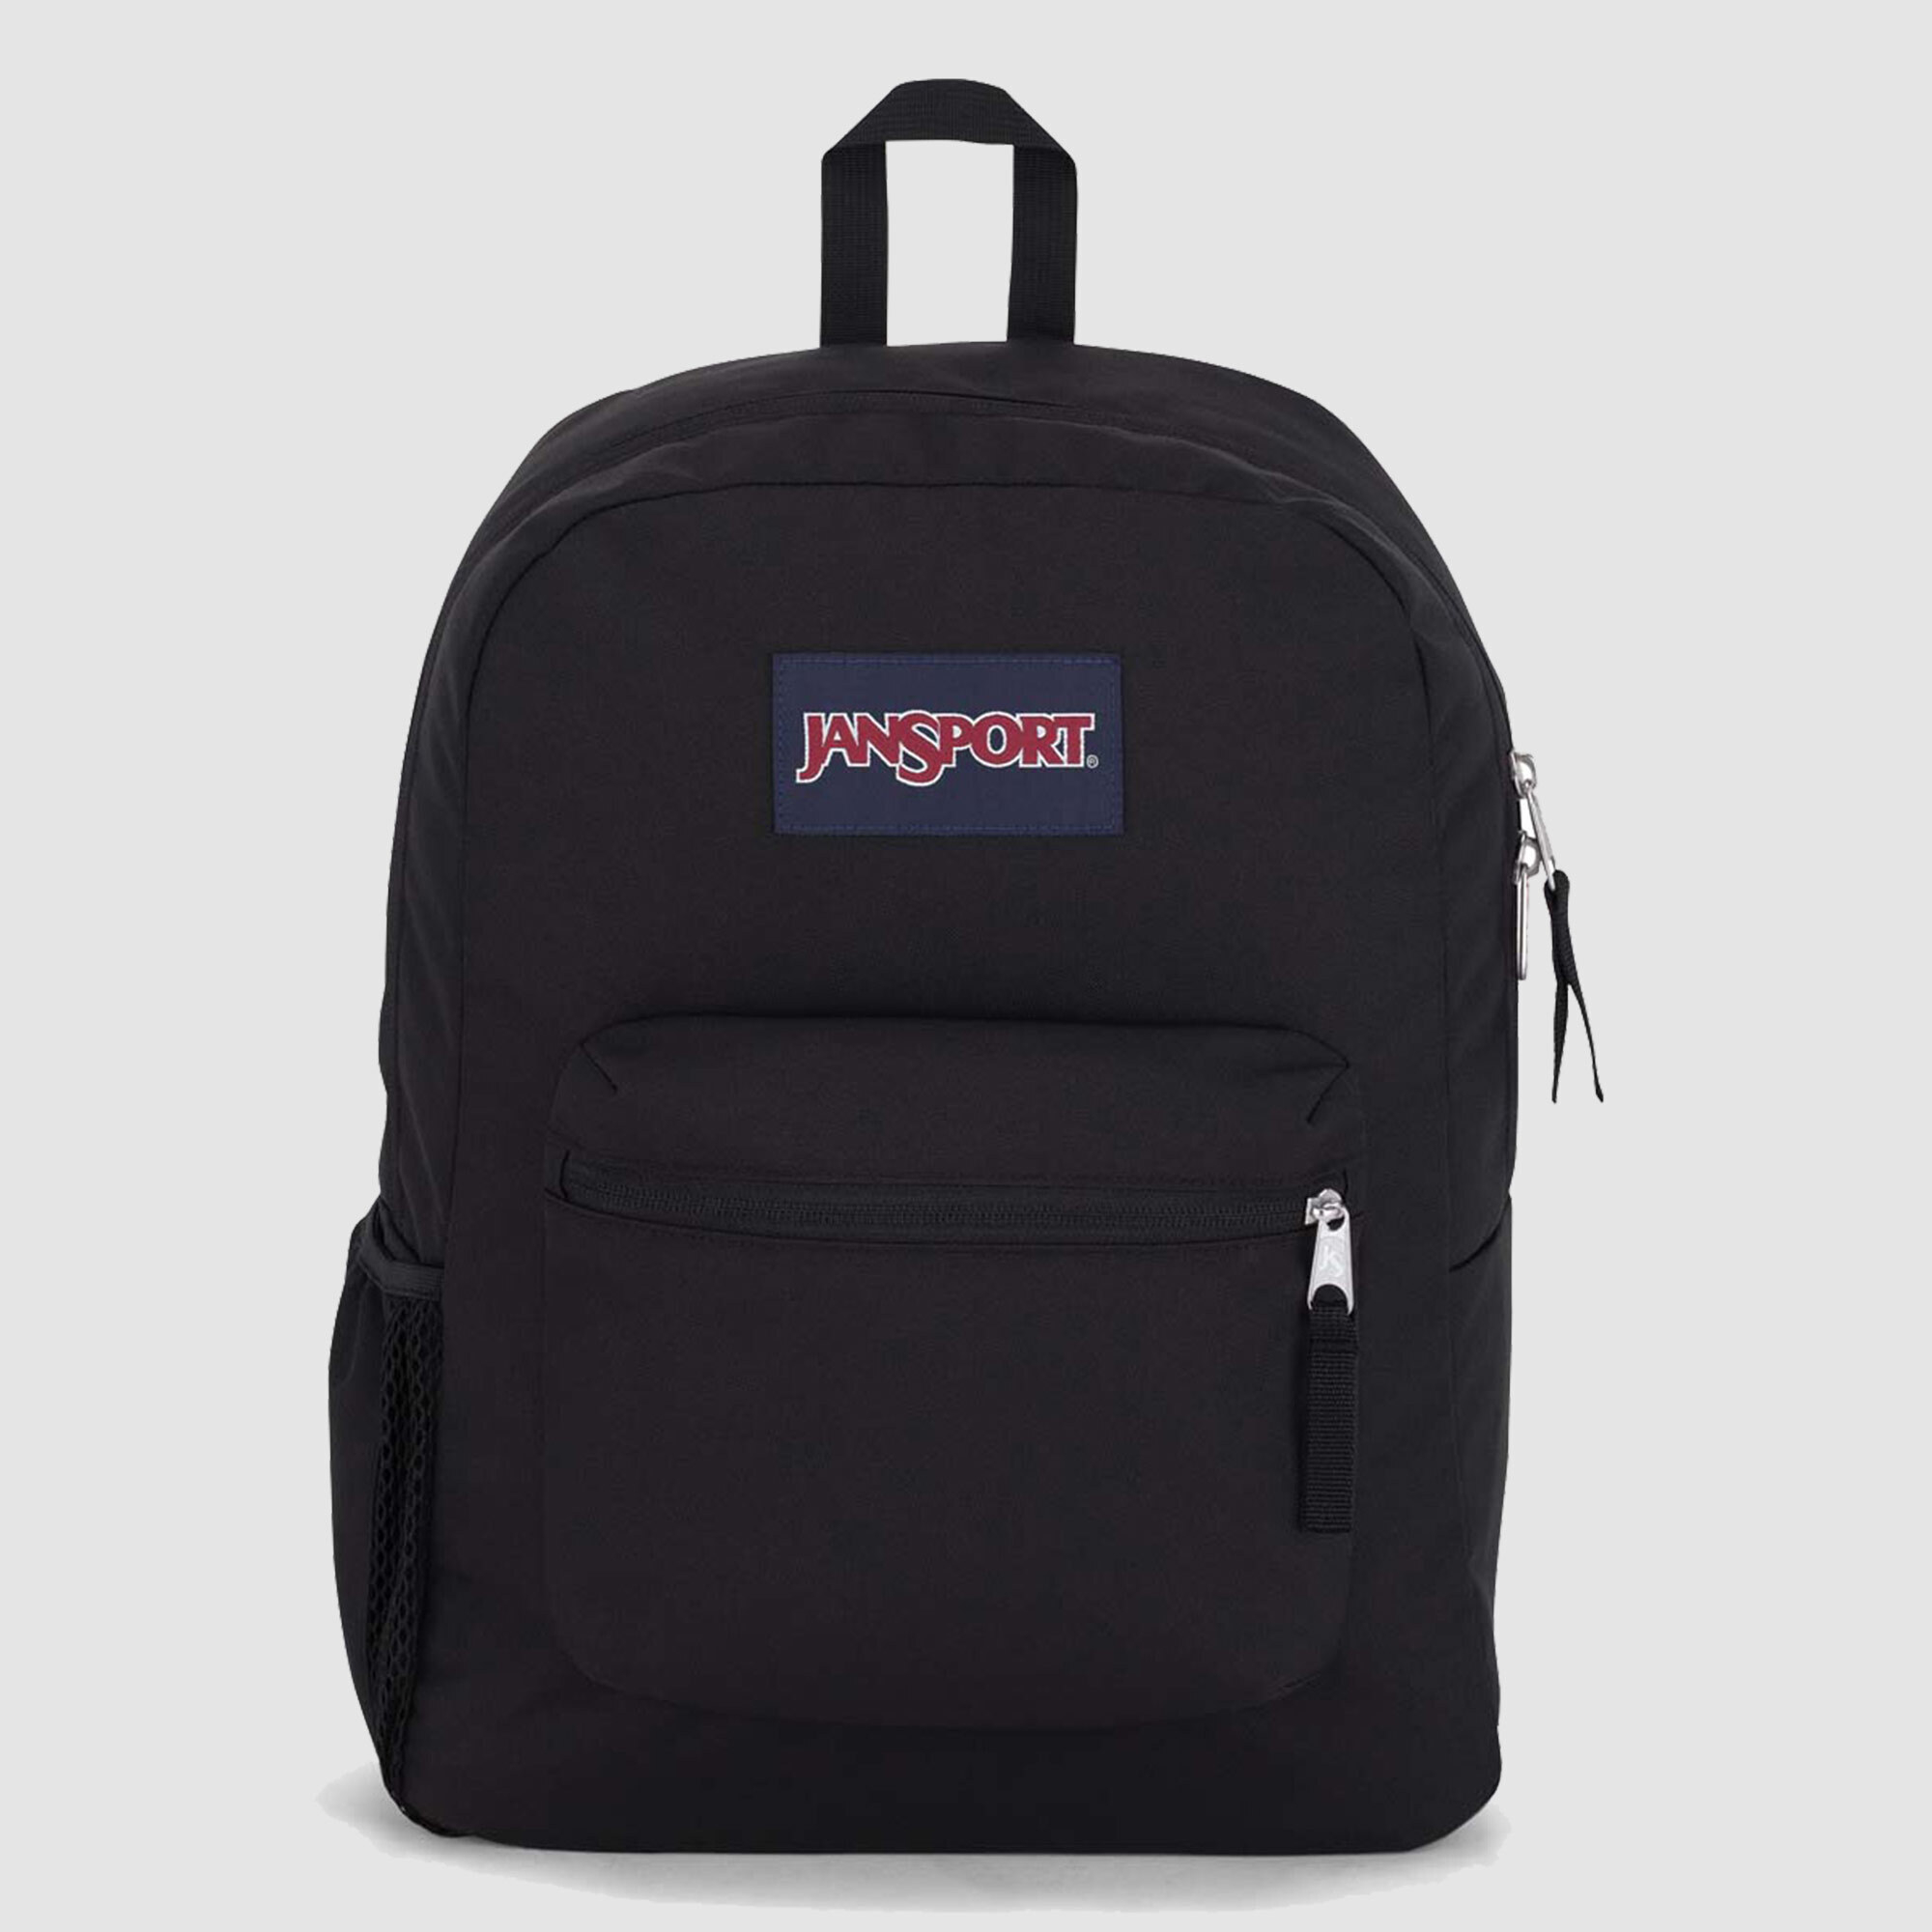 JanSport Crosstown Backpack Black 26 Litres